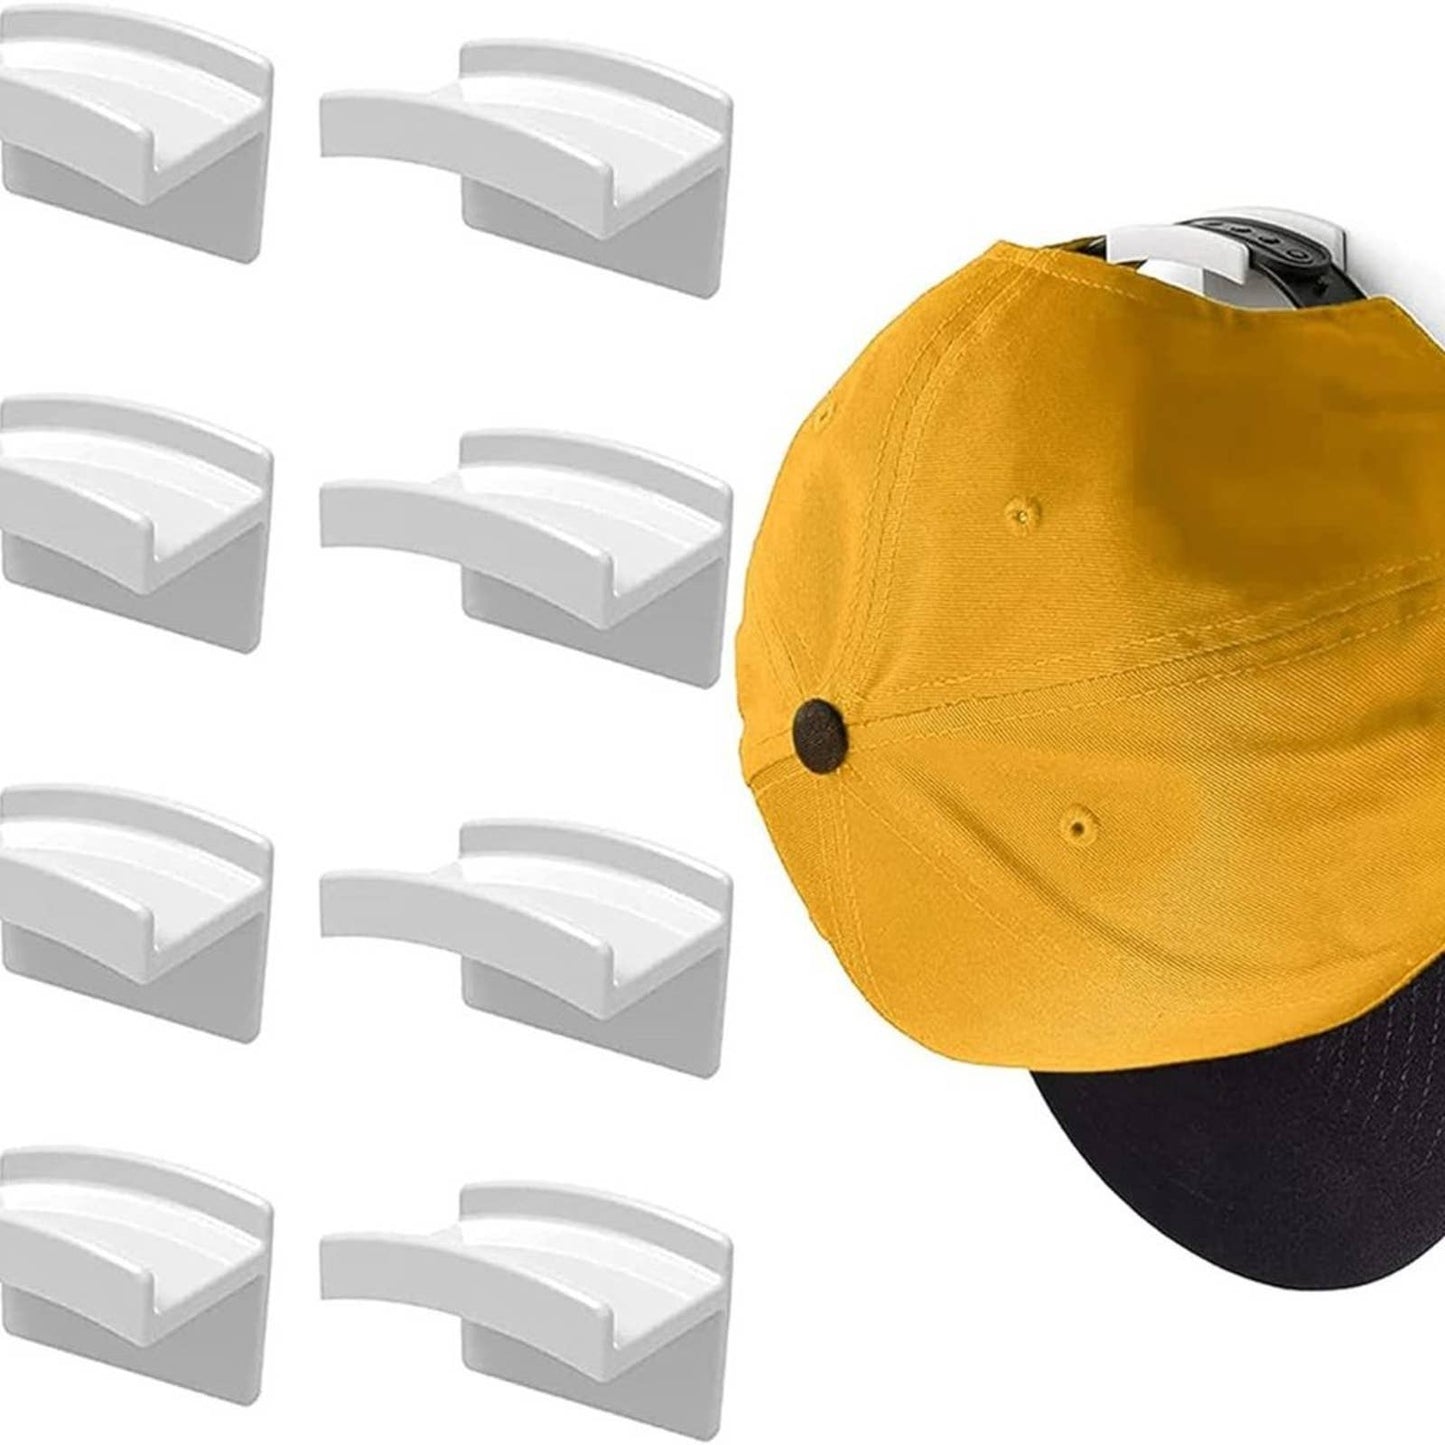 FLANCCI Hat Hooks for Wall, Minimalist Hat Rack Design, Self Adhesive Hangers